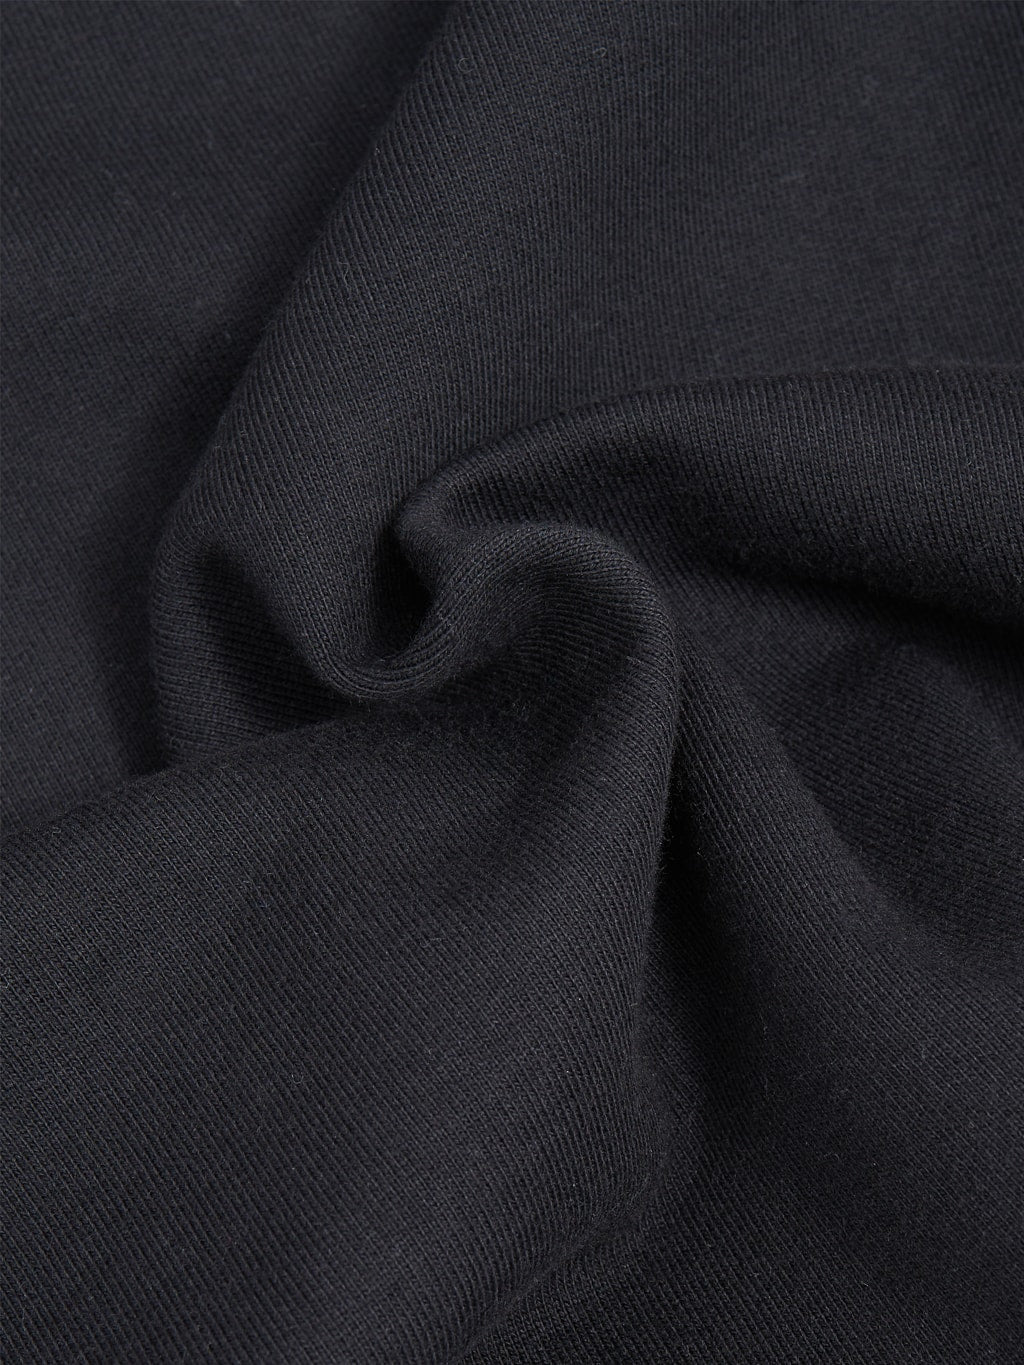 Merz b schwanen loopwheeled sweatshirt heavy black cotton texture